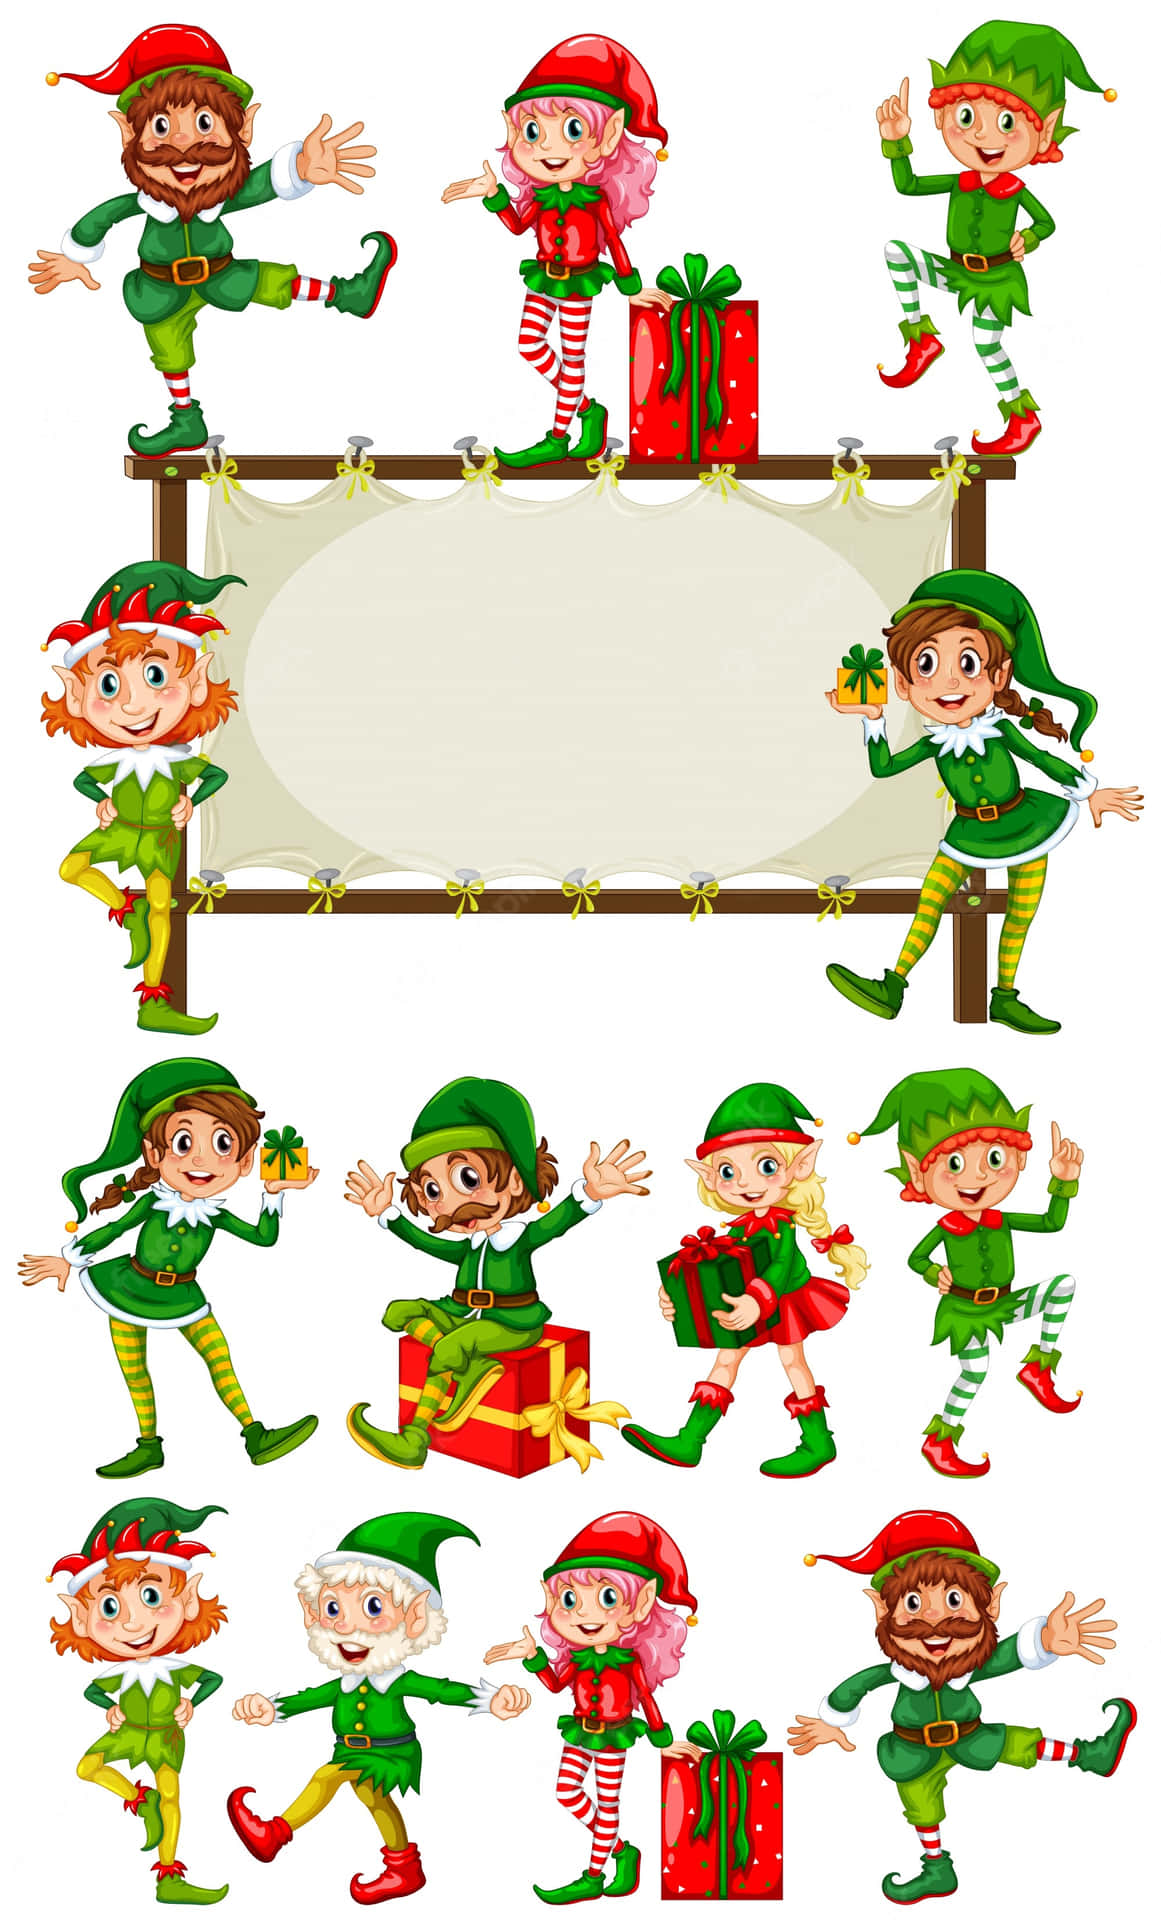 Joyful Christmas Elves Getting Ready for the Holiday Season Wallpaper